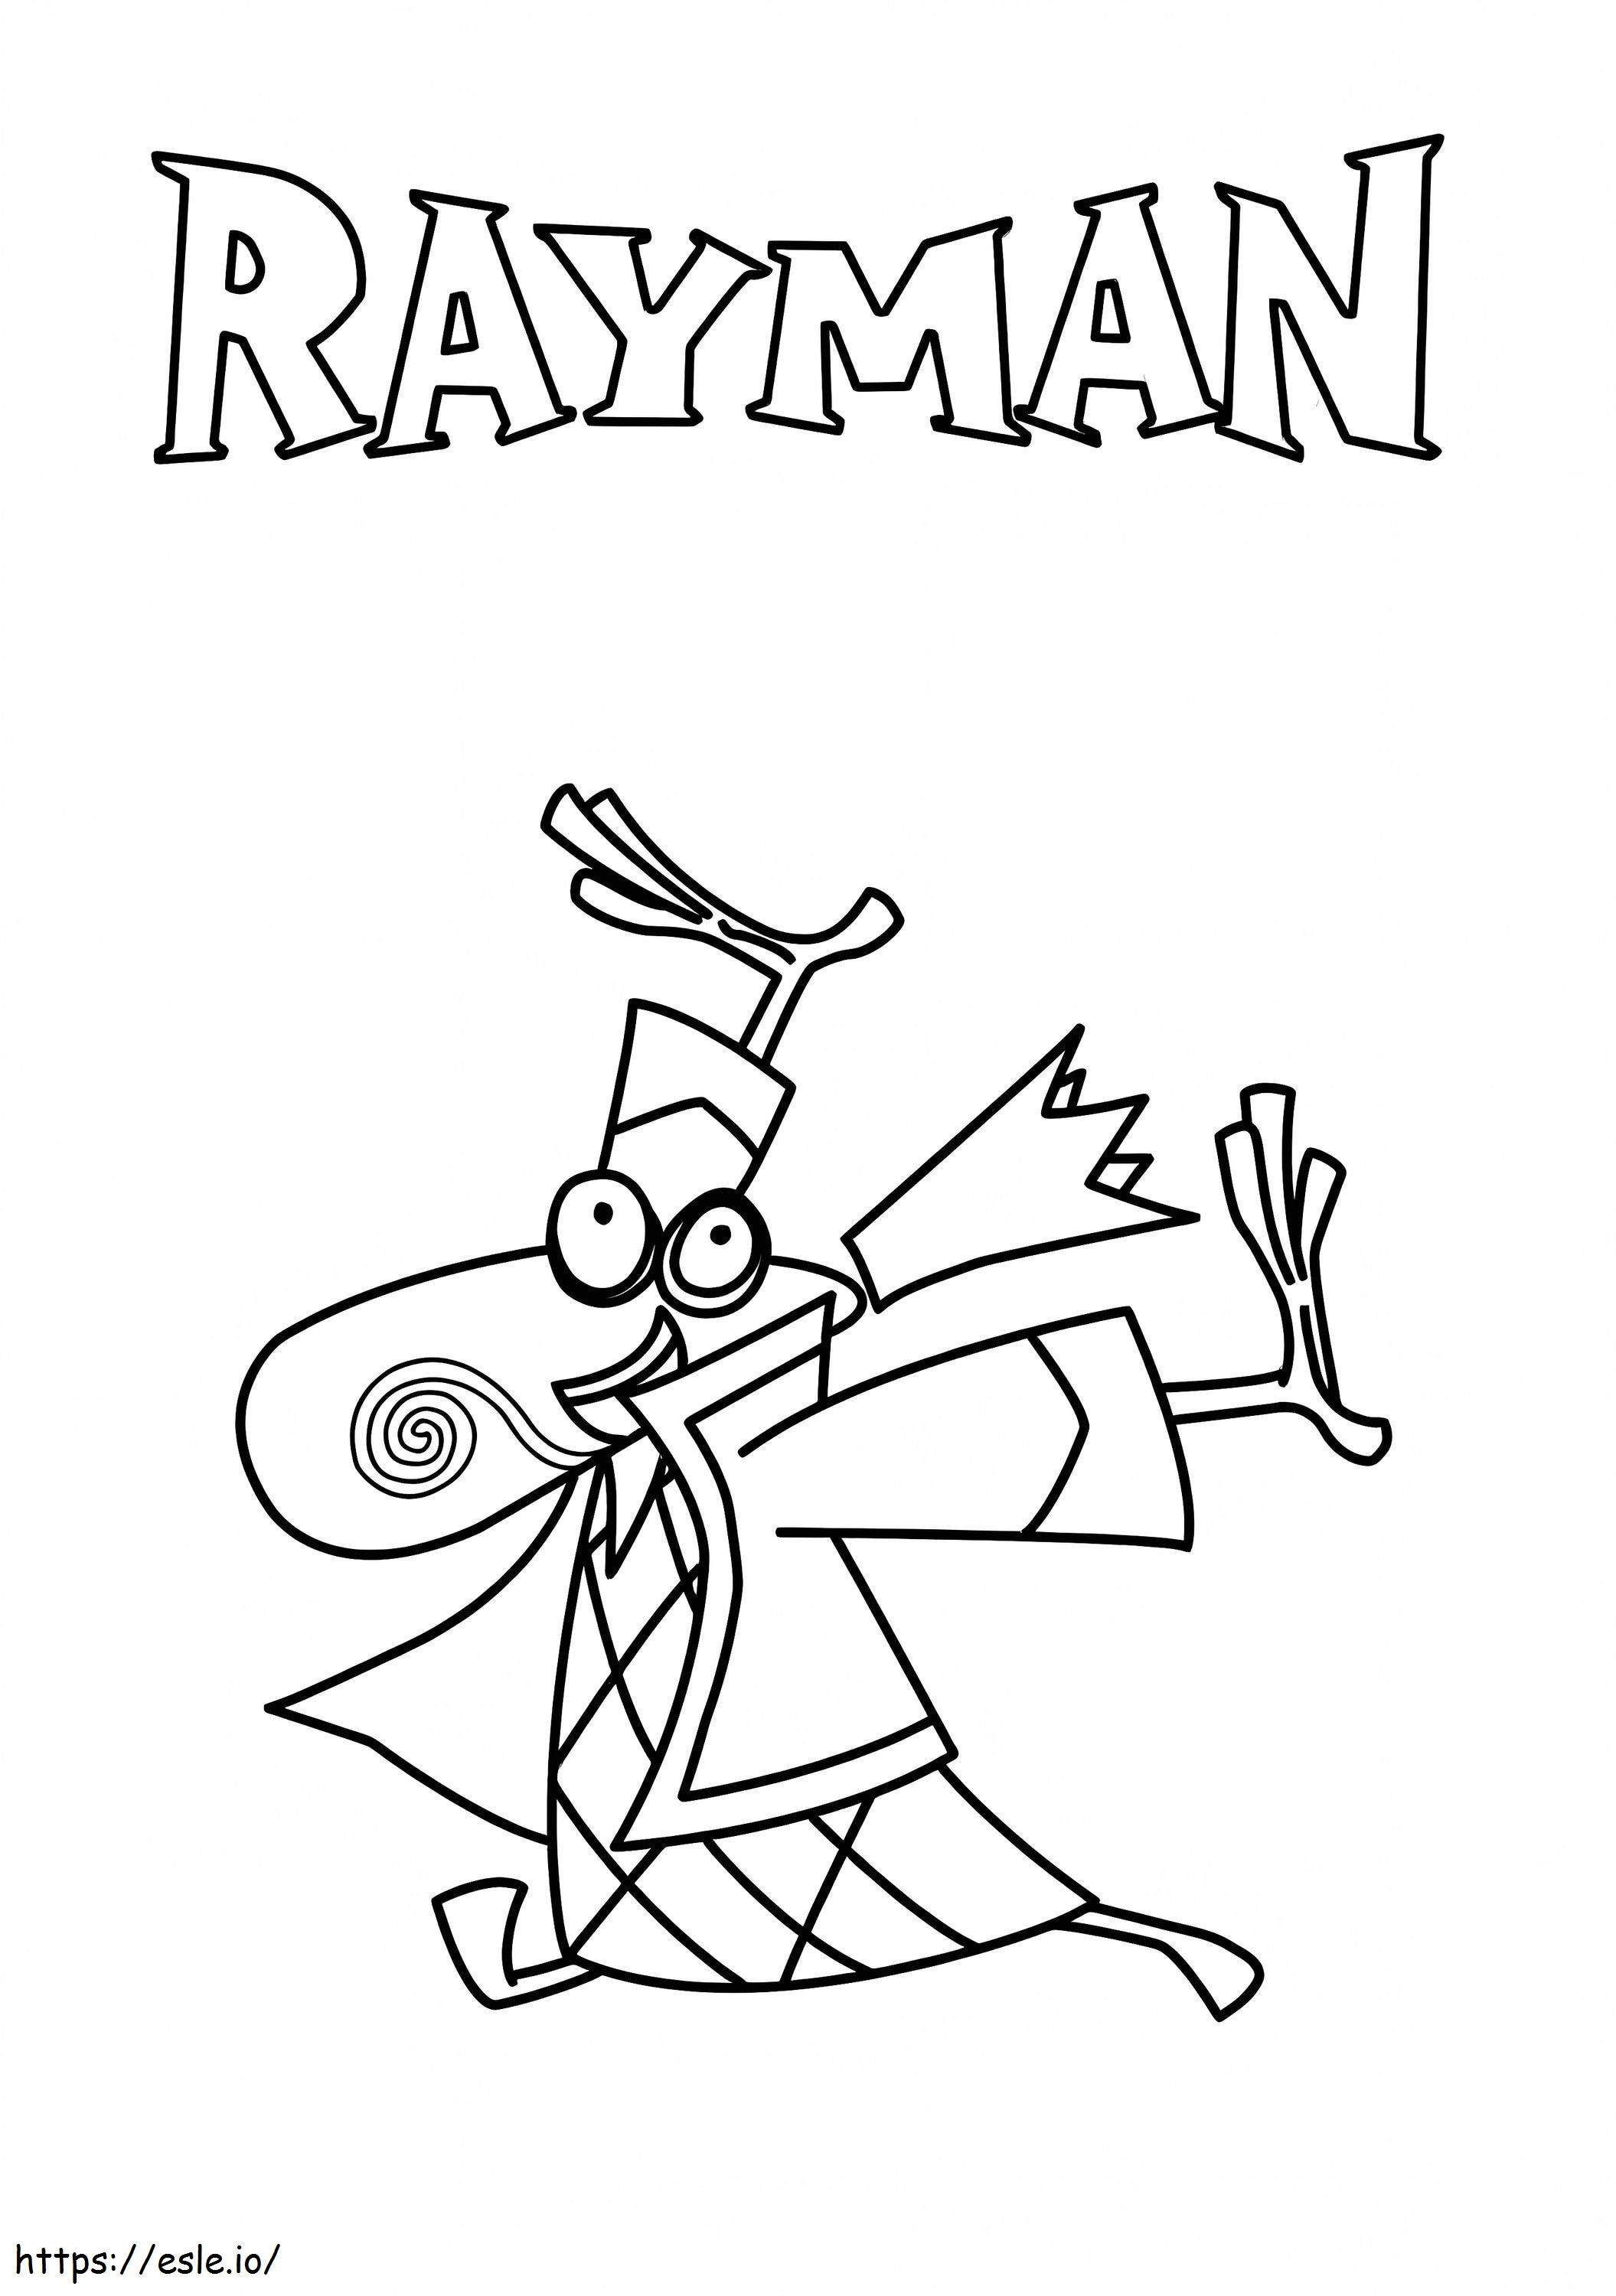 Rayman'dan Teensy boyama